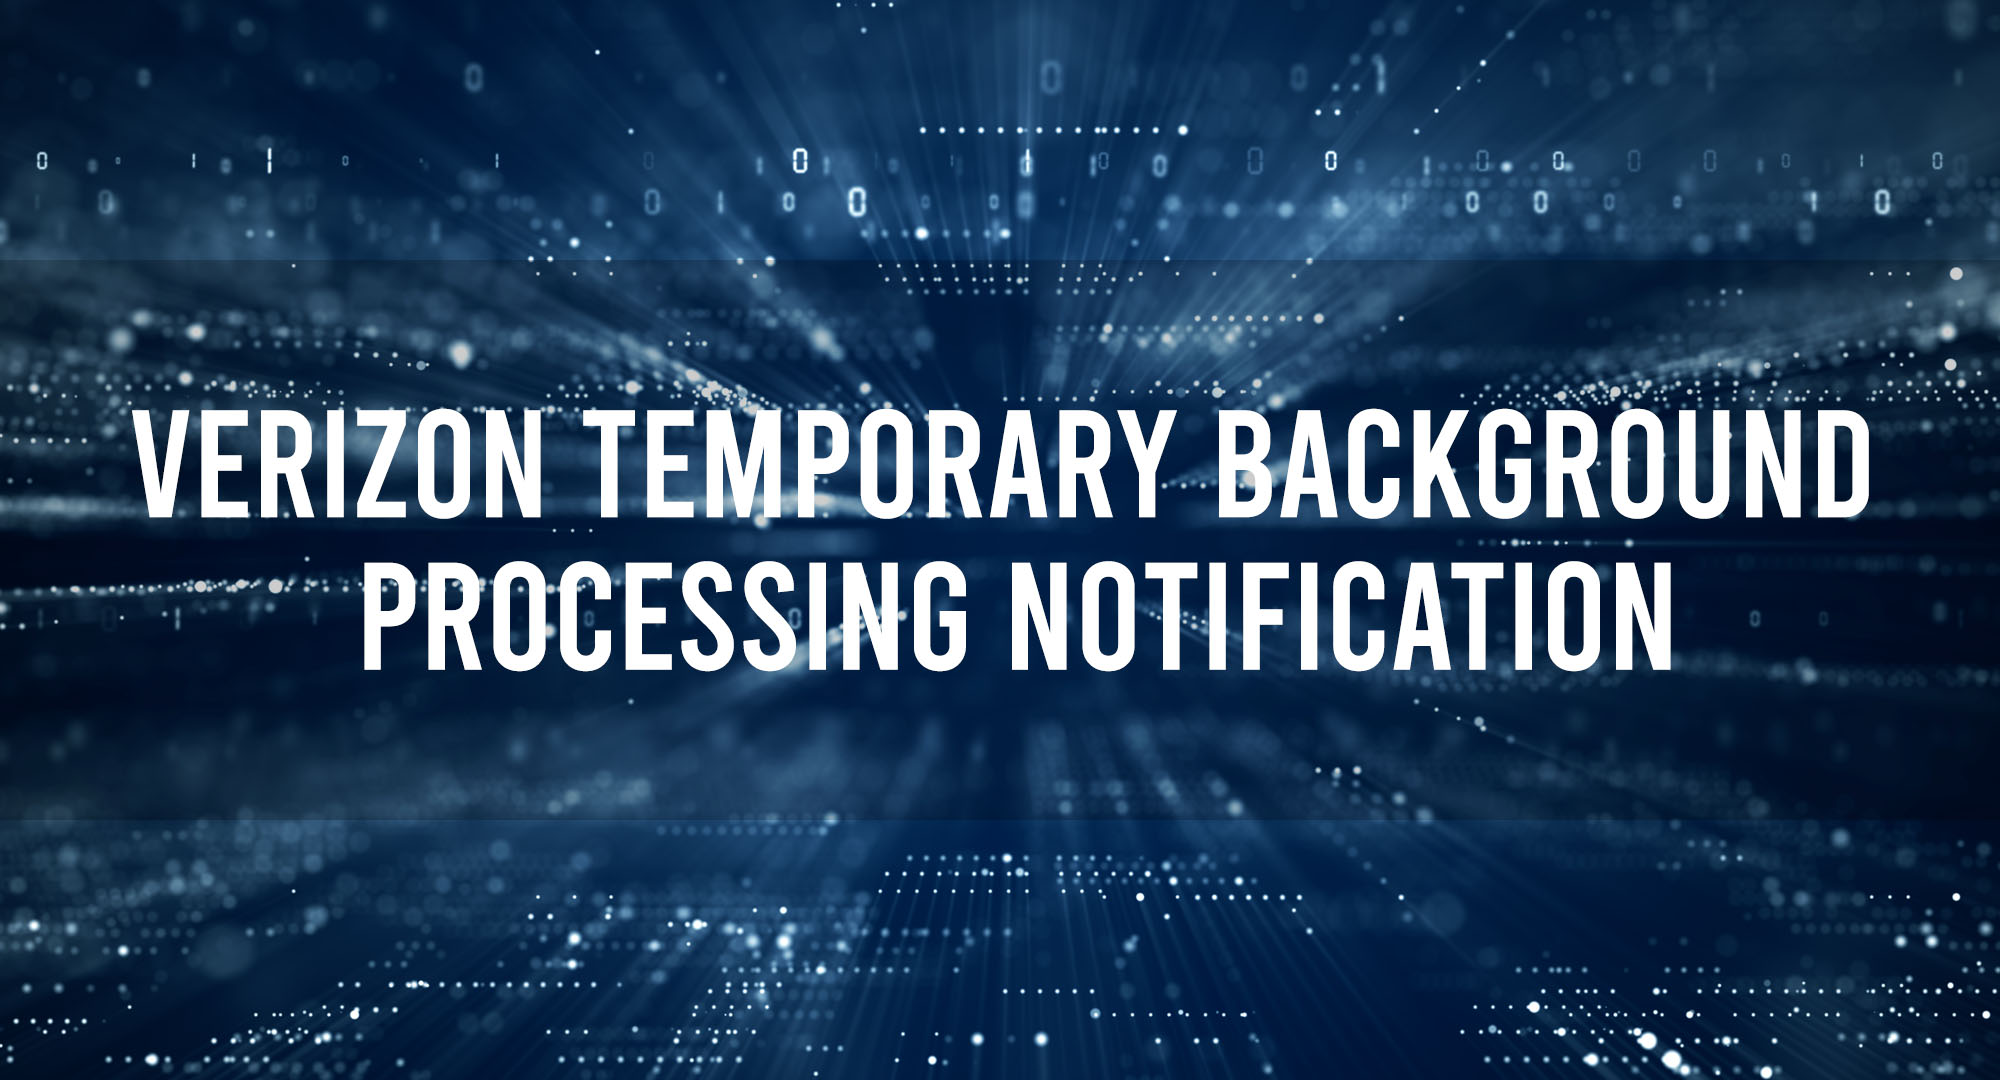 Verizon Temporary Background Processing Notification